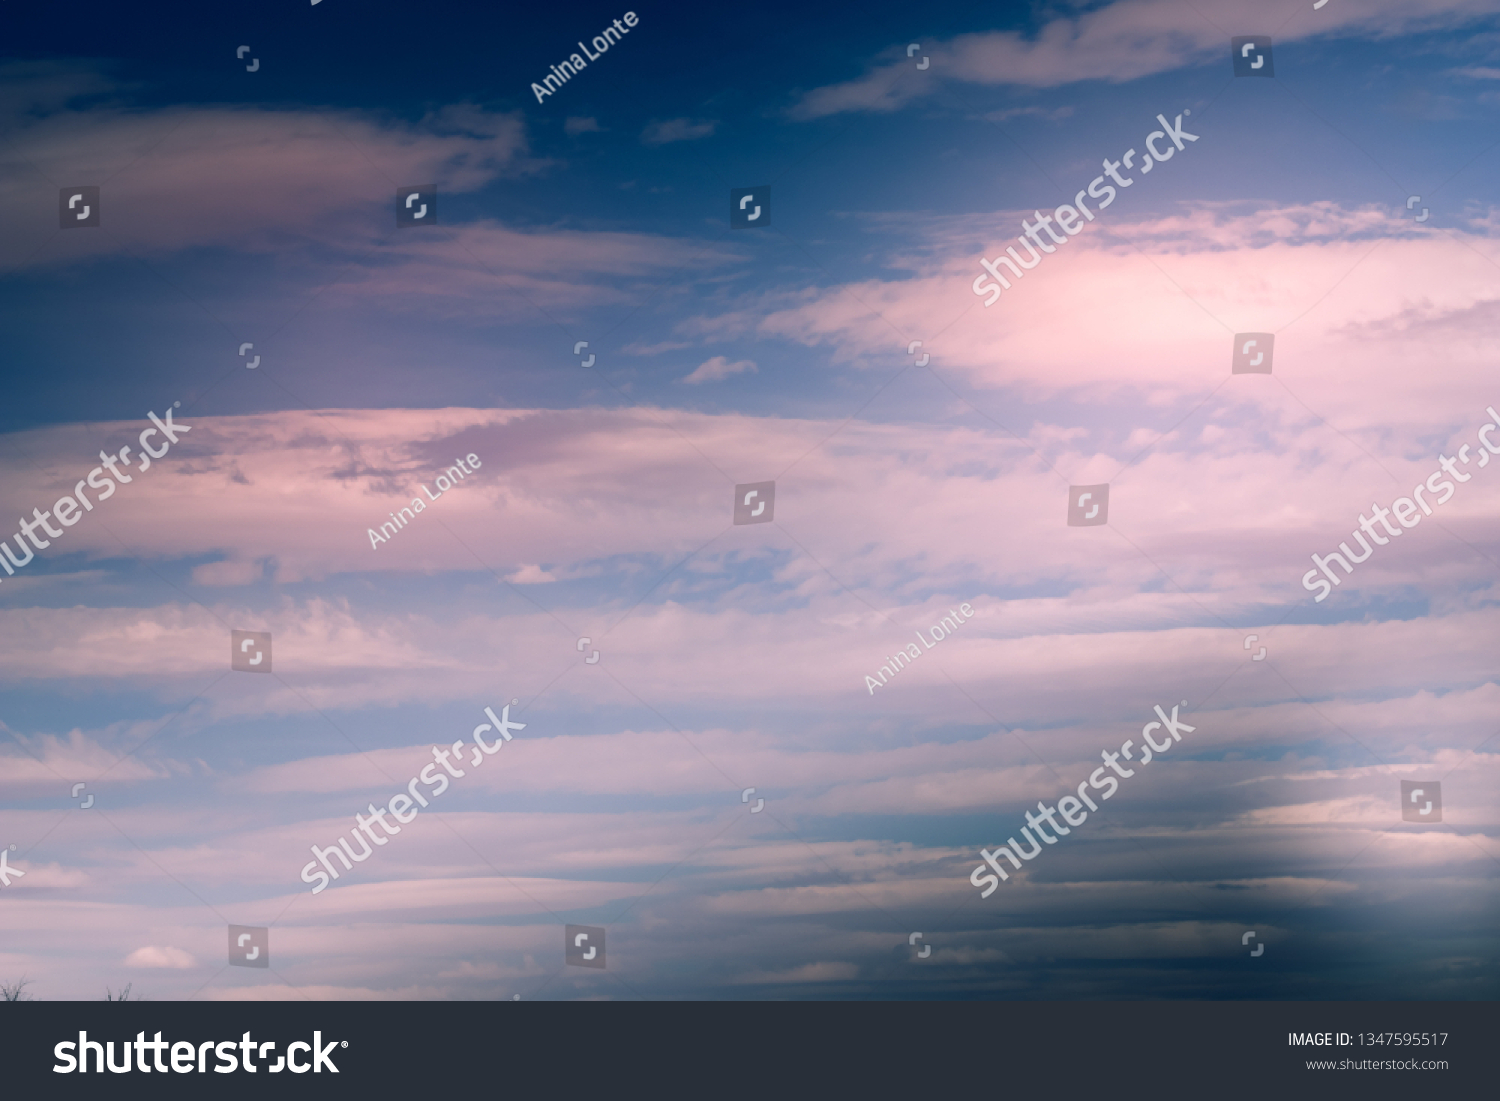 Soft, pinkish lenticular Clouds #1347595517